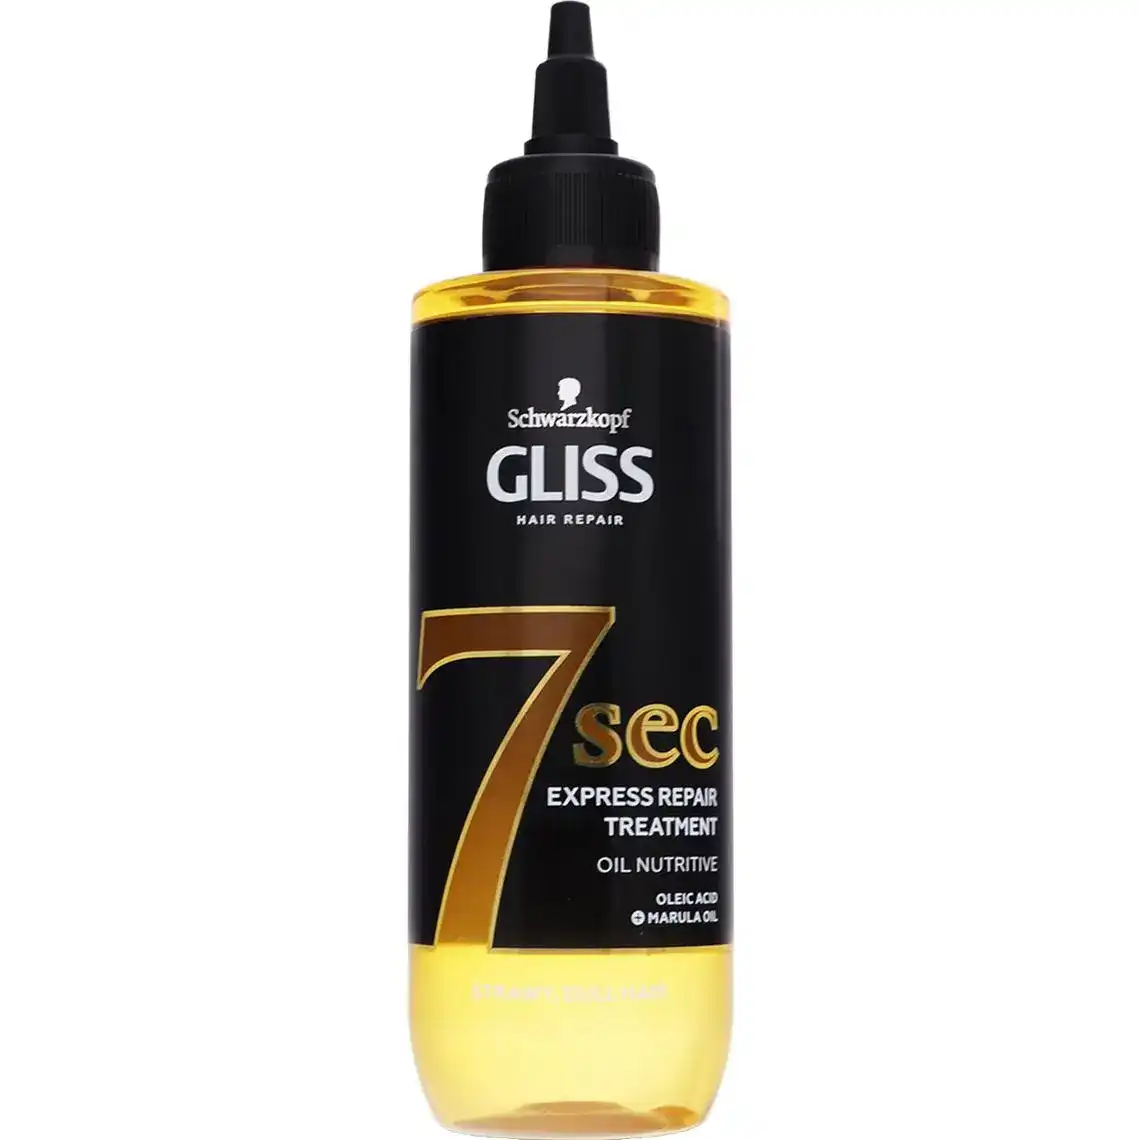 Експрес-маска для волосся Gliss Kur 7 Sec Express Oil Nutritive для тьмяного волосся 200 мл